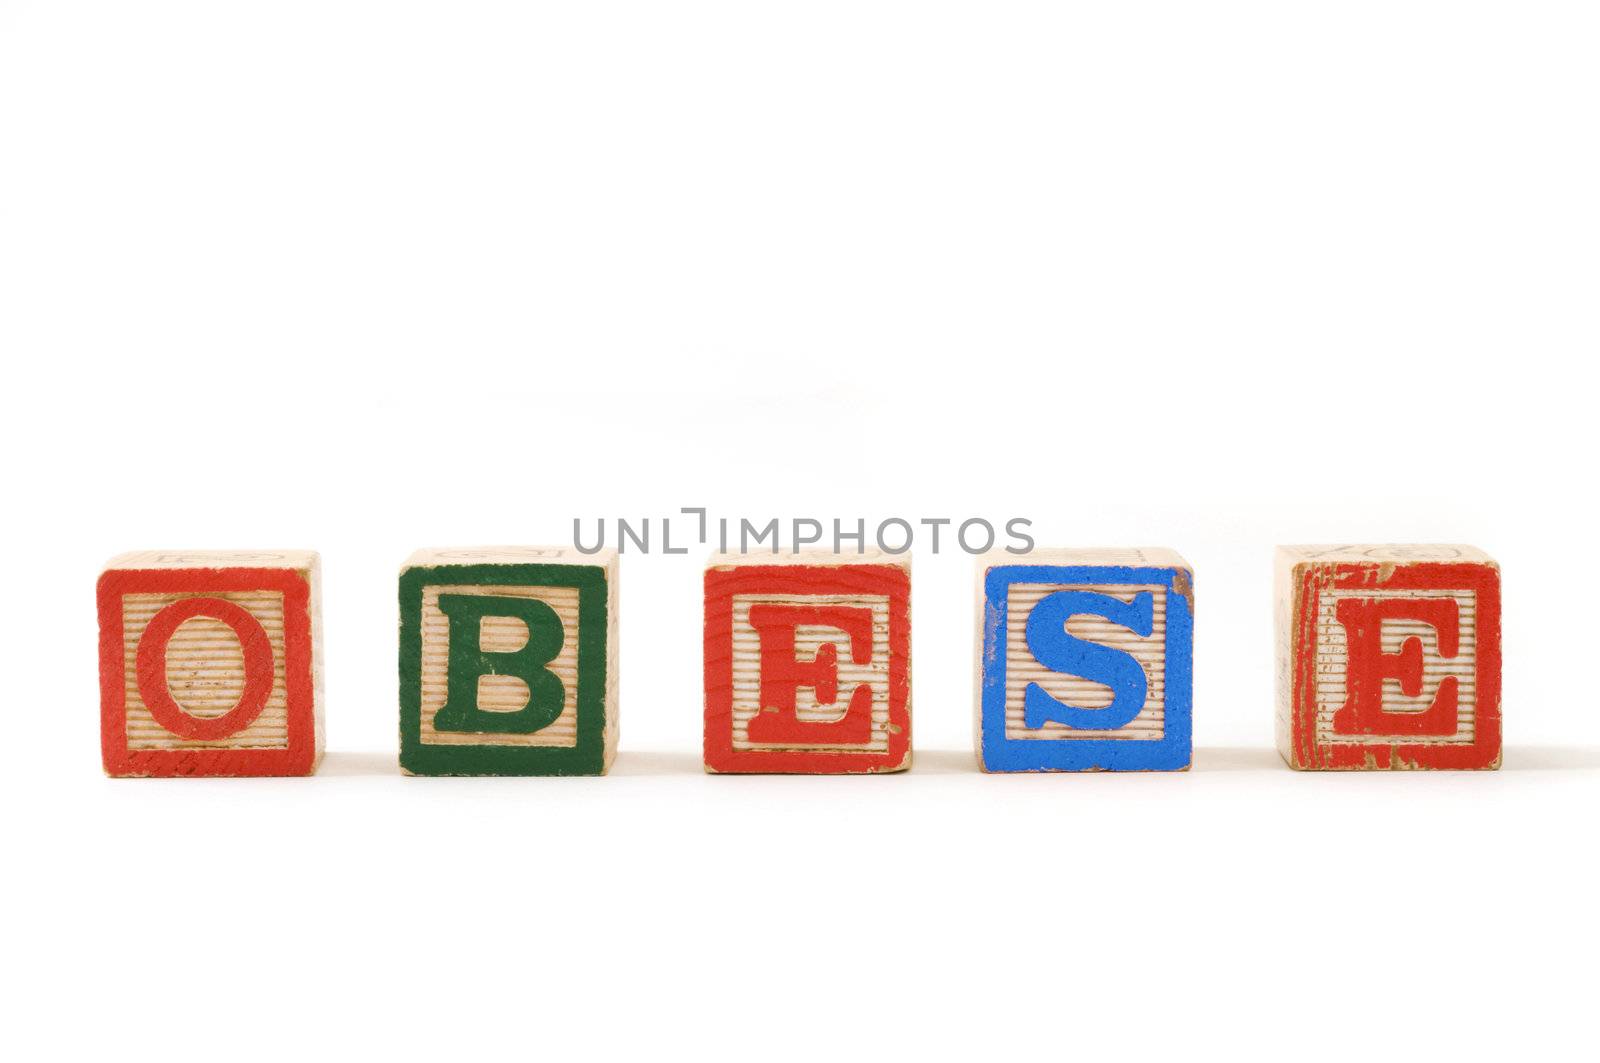 Children's wooden blocks spelling the word "Obese" on white background